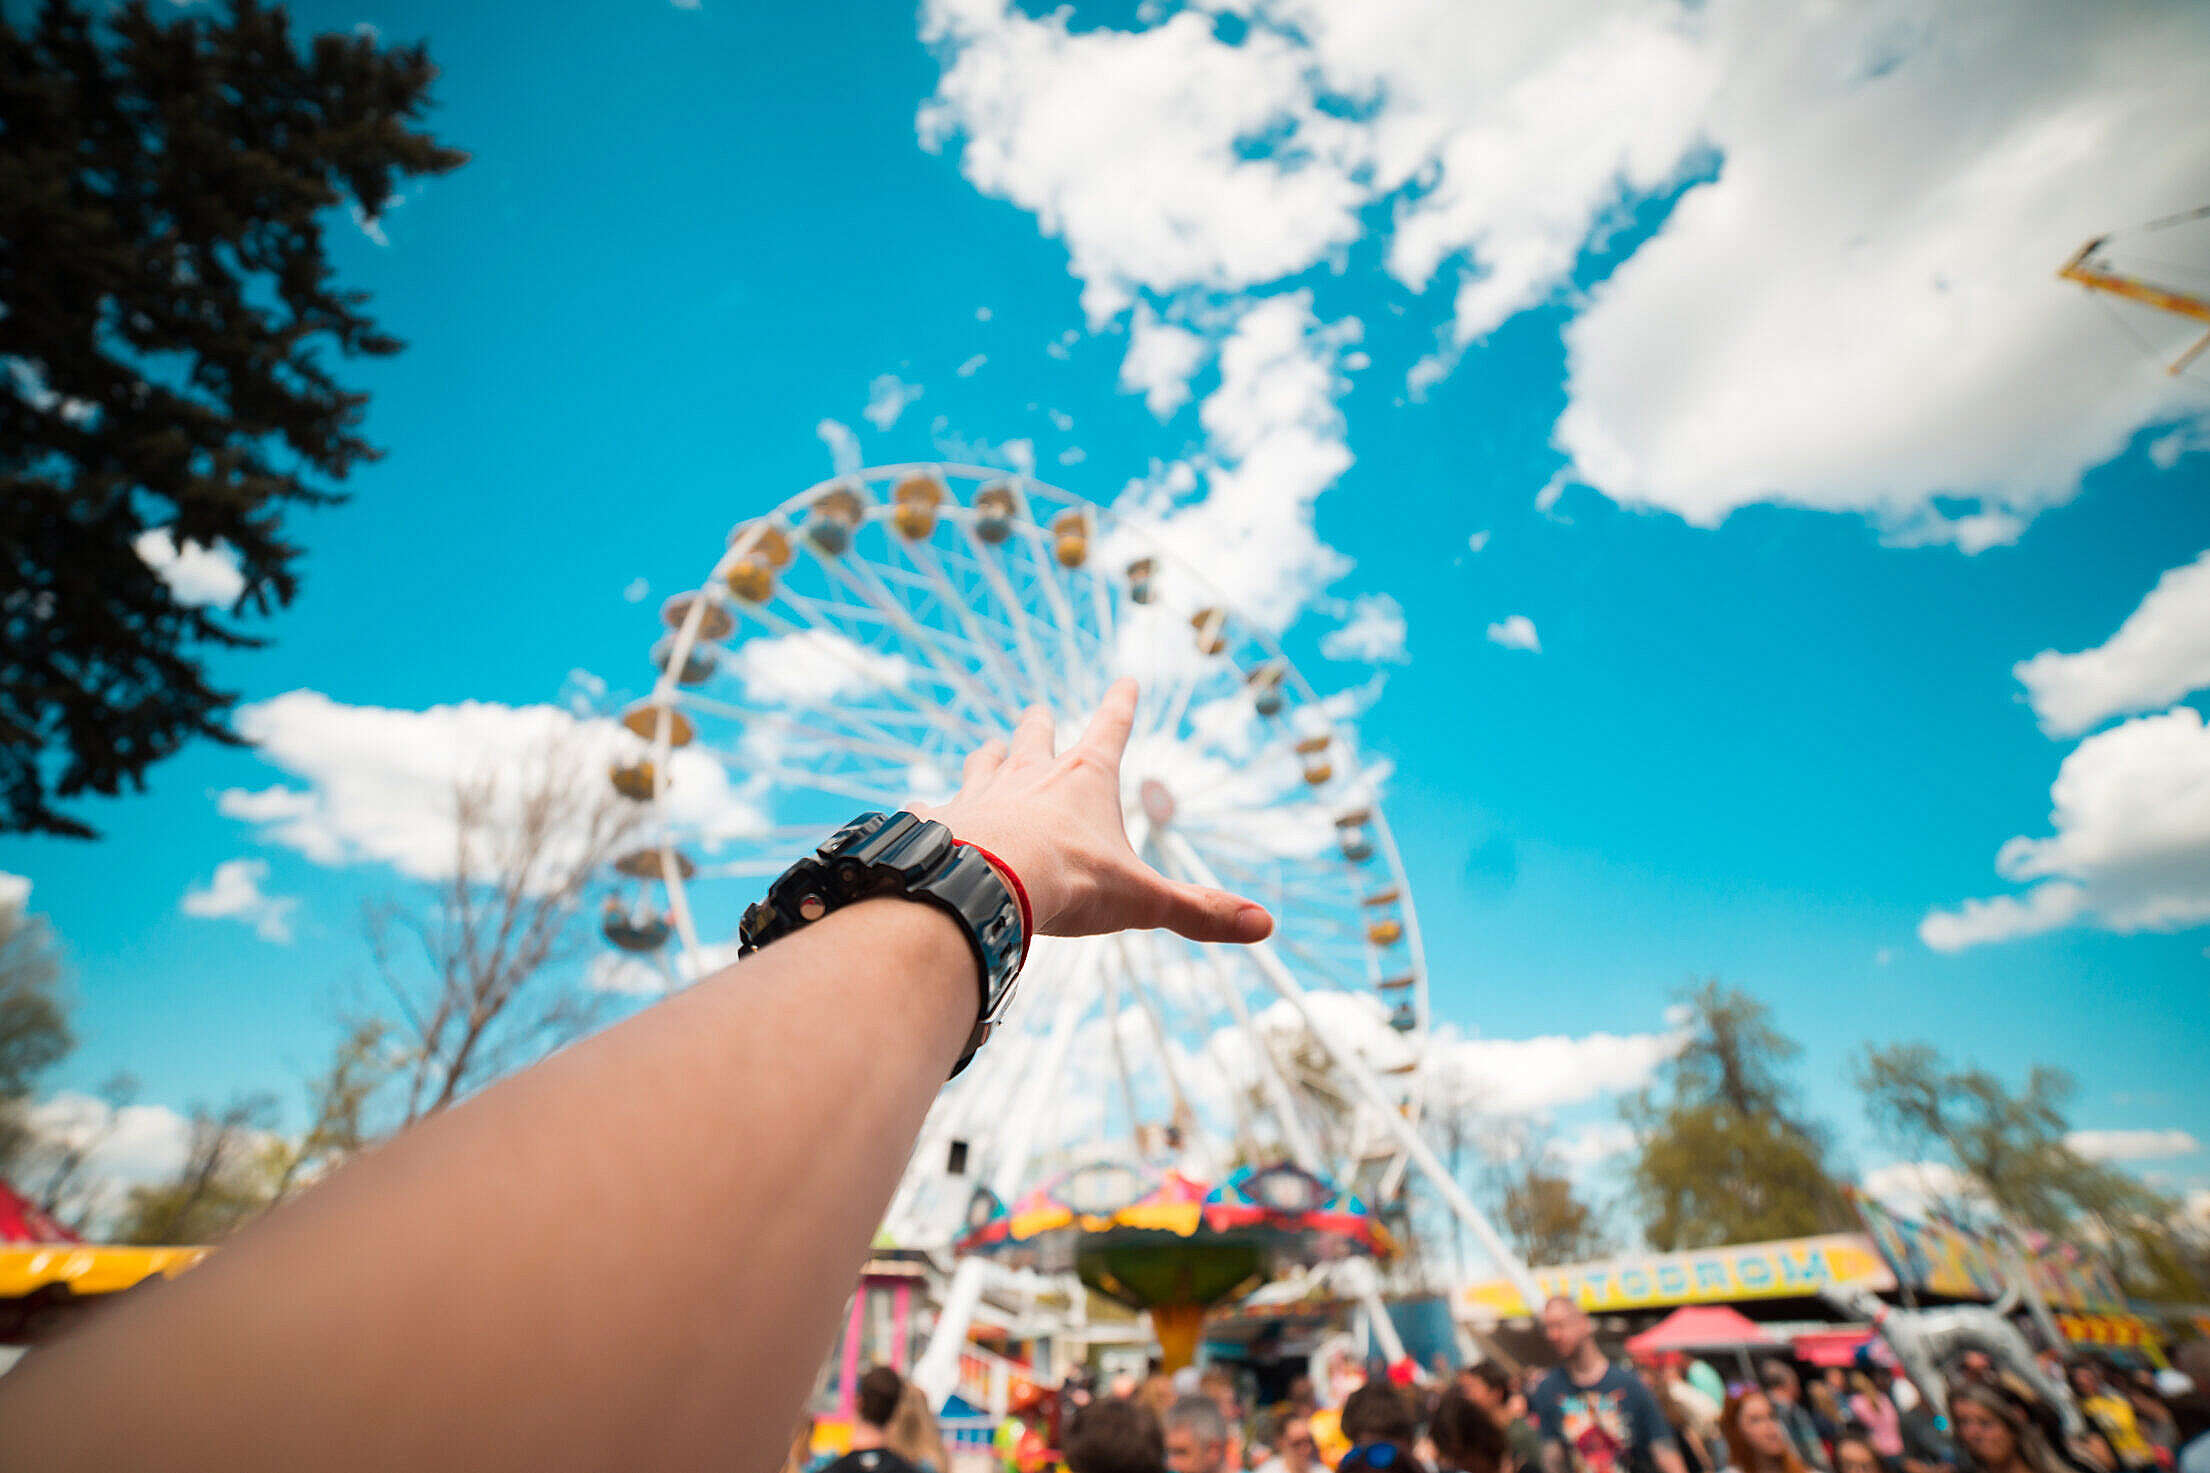 Hand Reaching the Ferris Wheel in Amusement Park Free Stock Photo